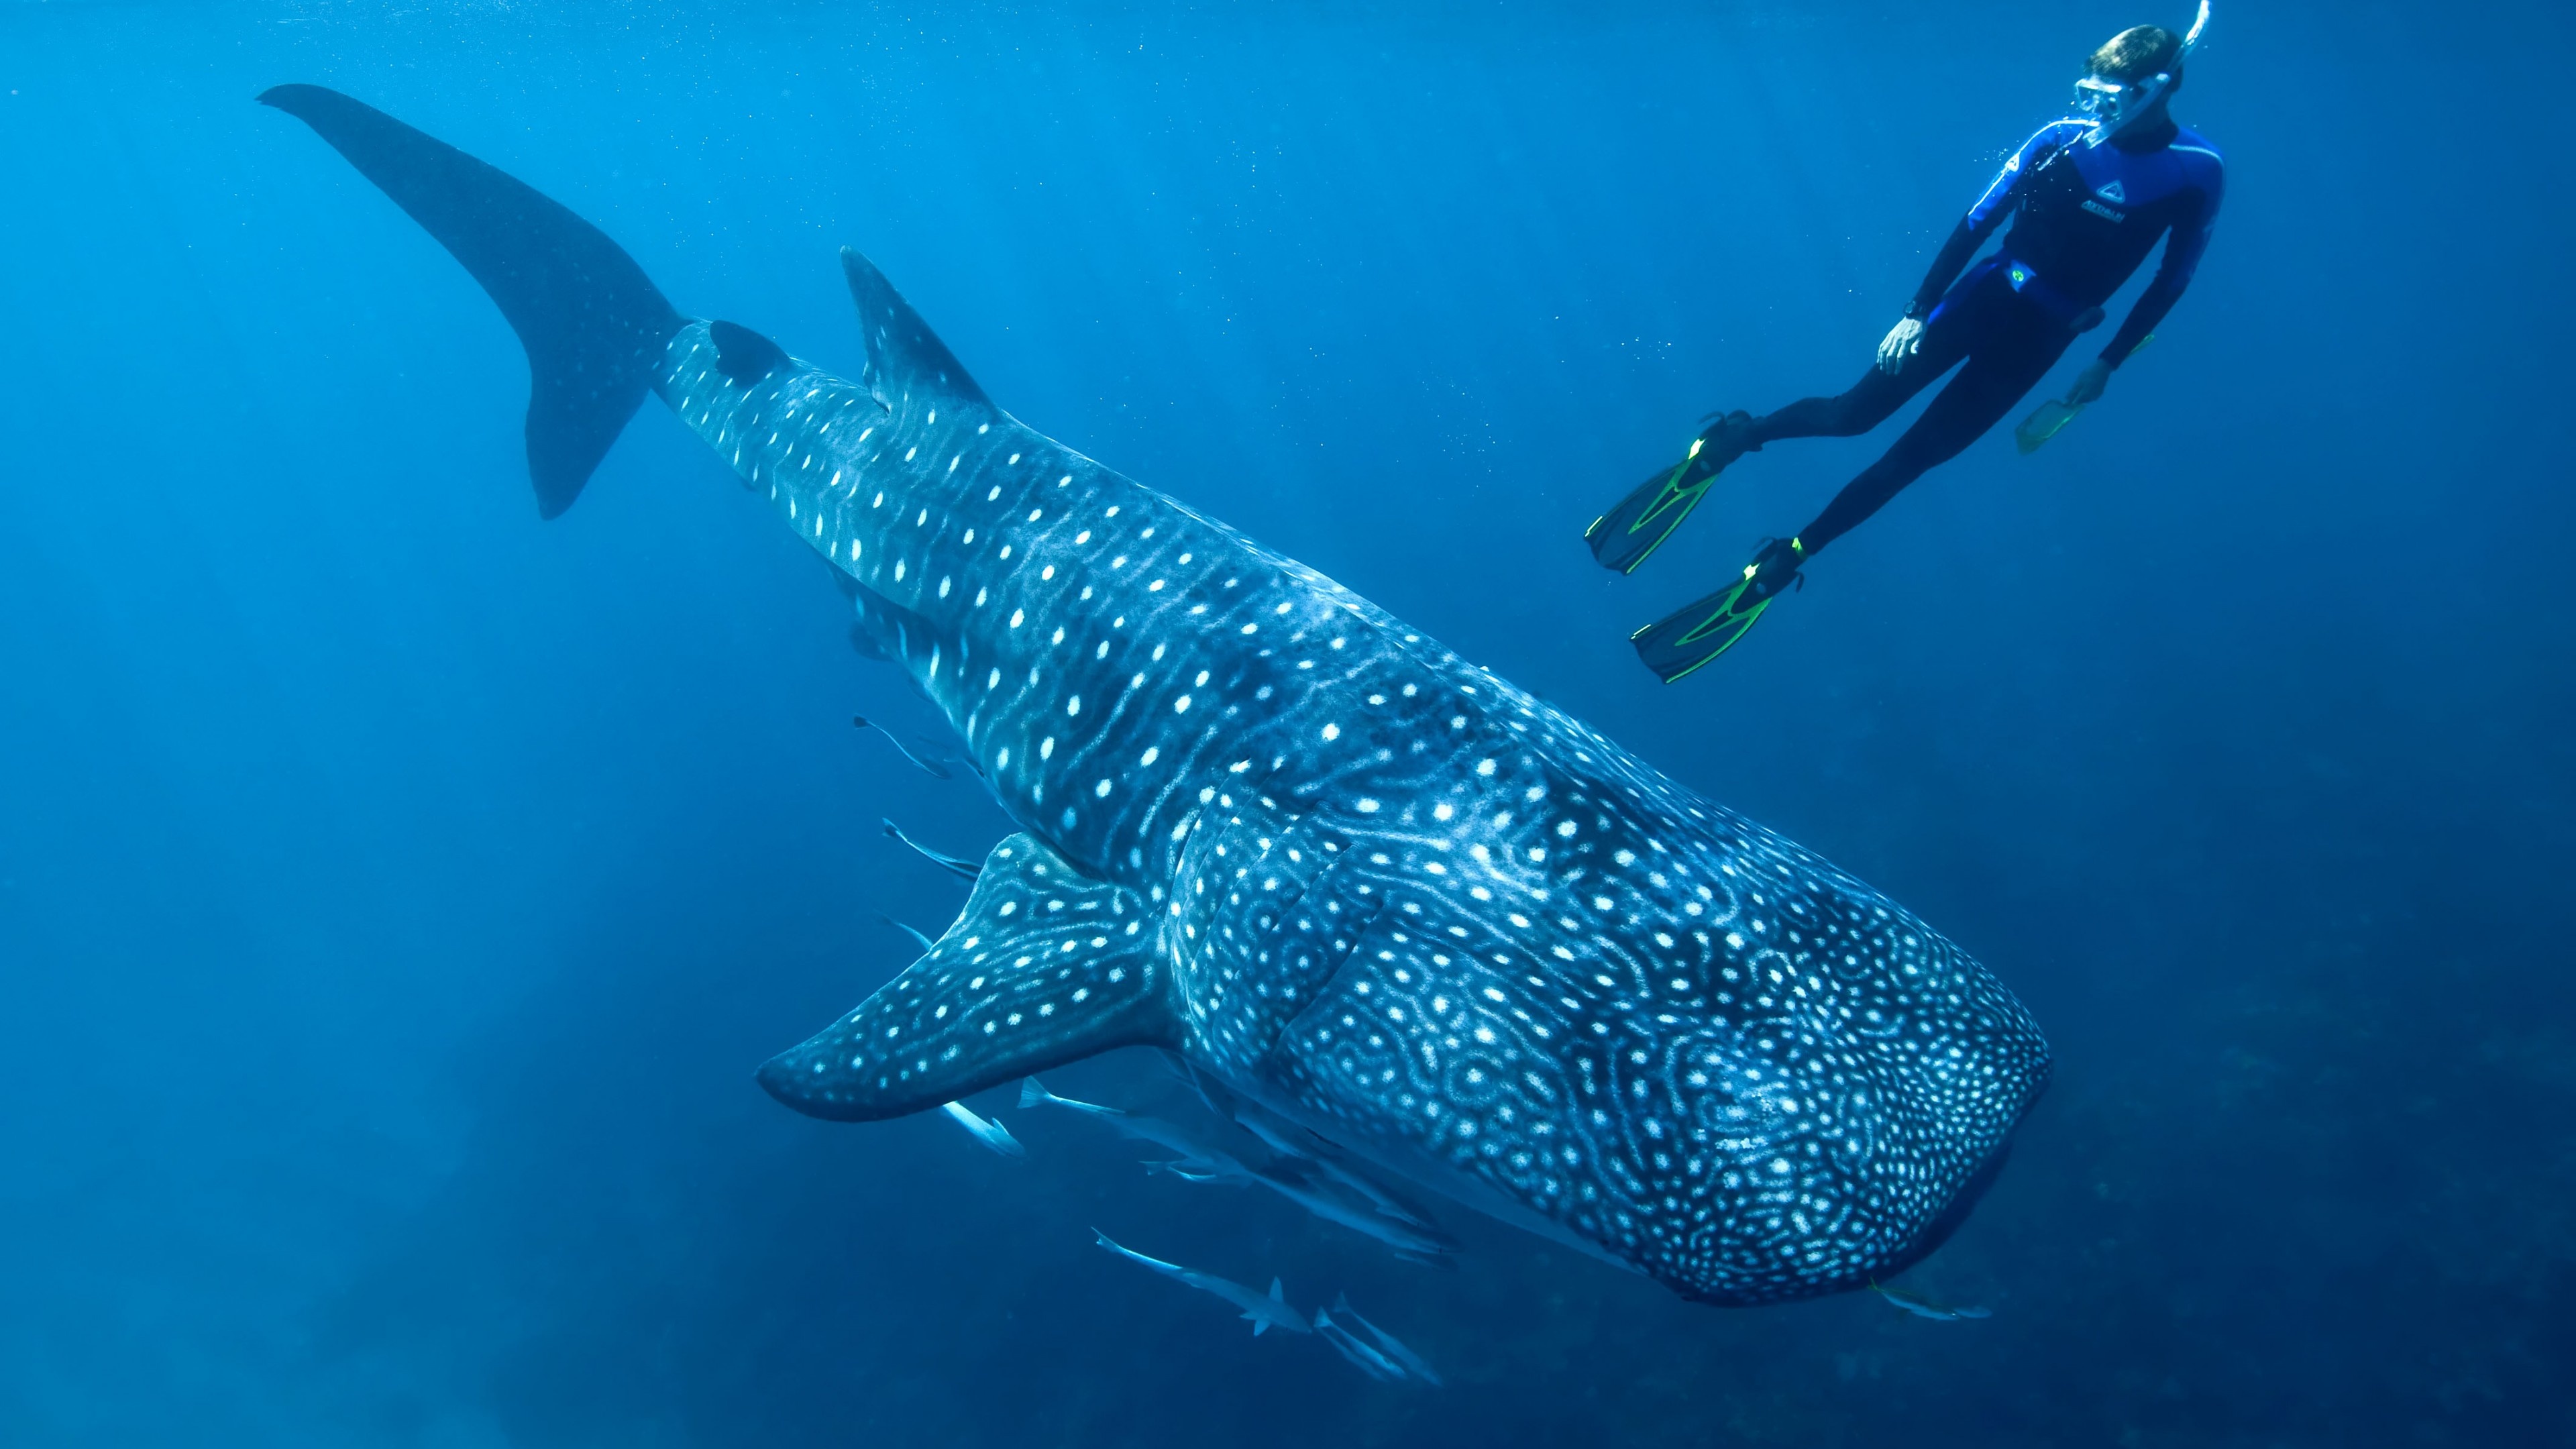 Diving: Whale Shark Underwater Diving UHD 4K Wallpaper for iMac - ZeeOii. 3840x2160 4K Background.